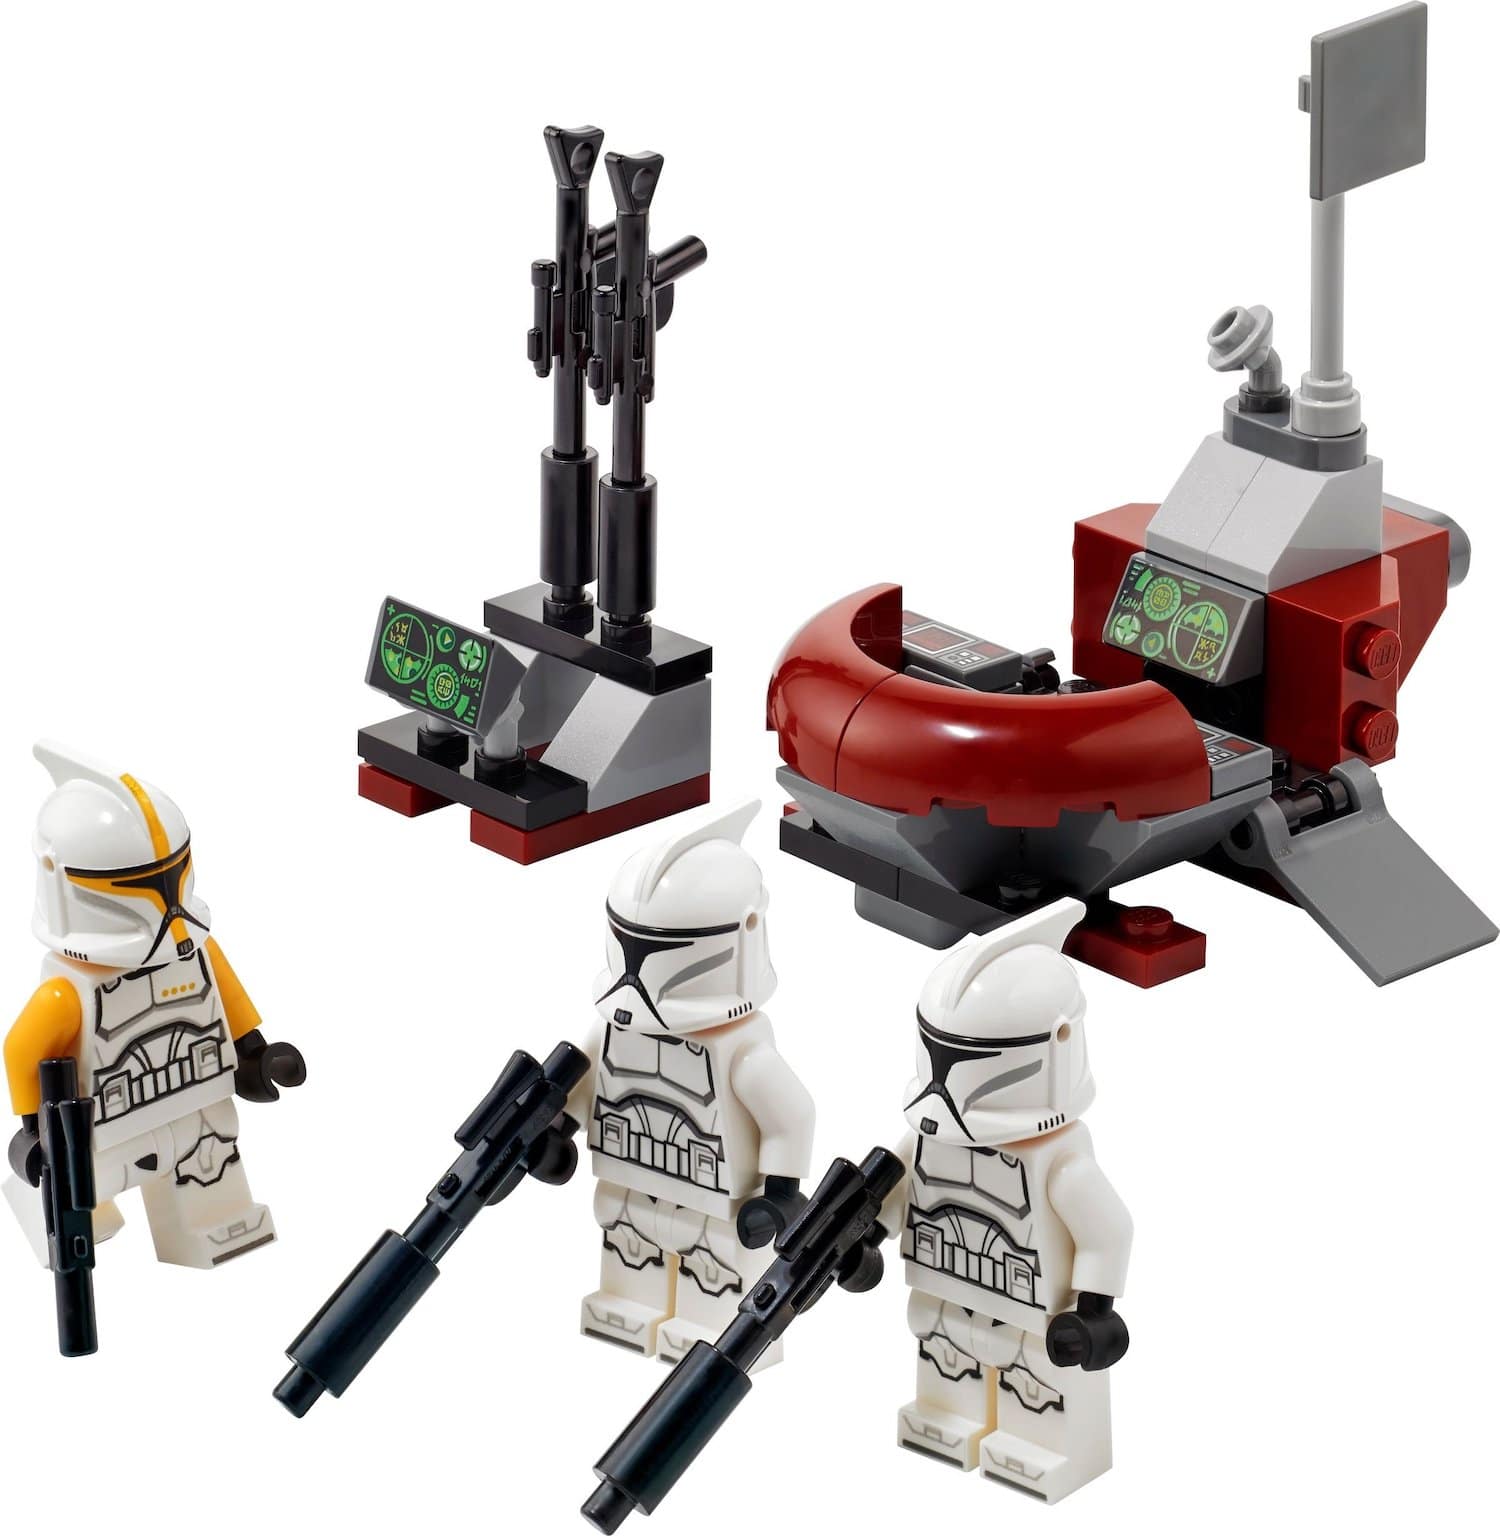 LEGO Star Wars Accessory Packs vorgestellt